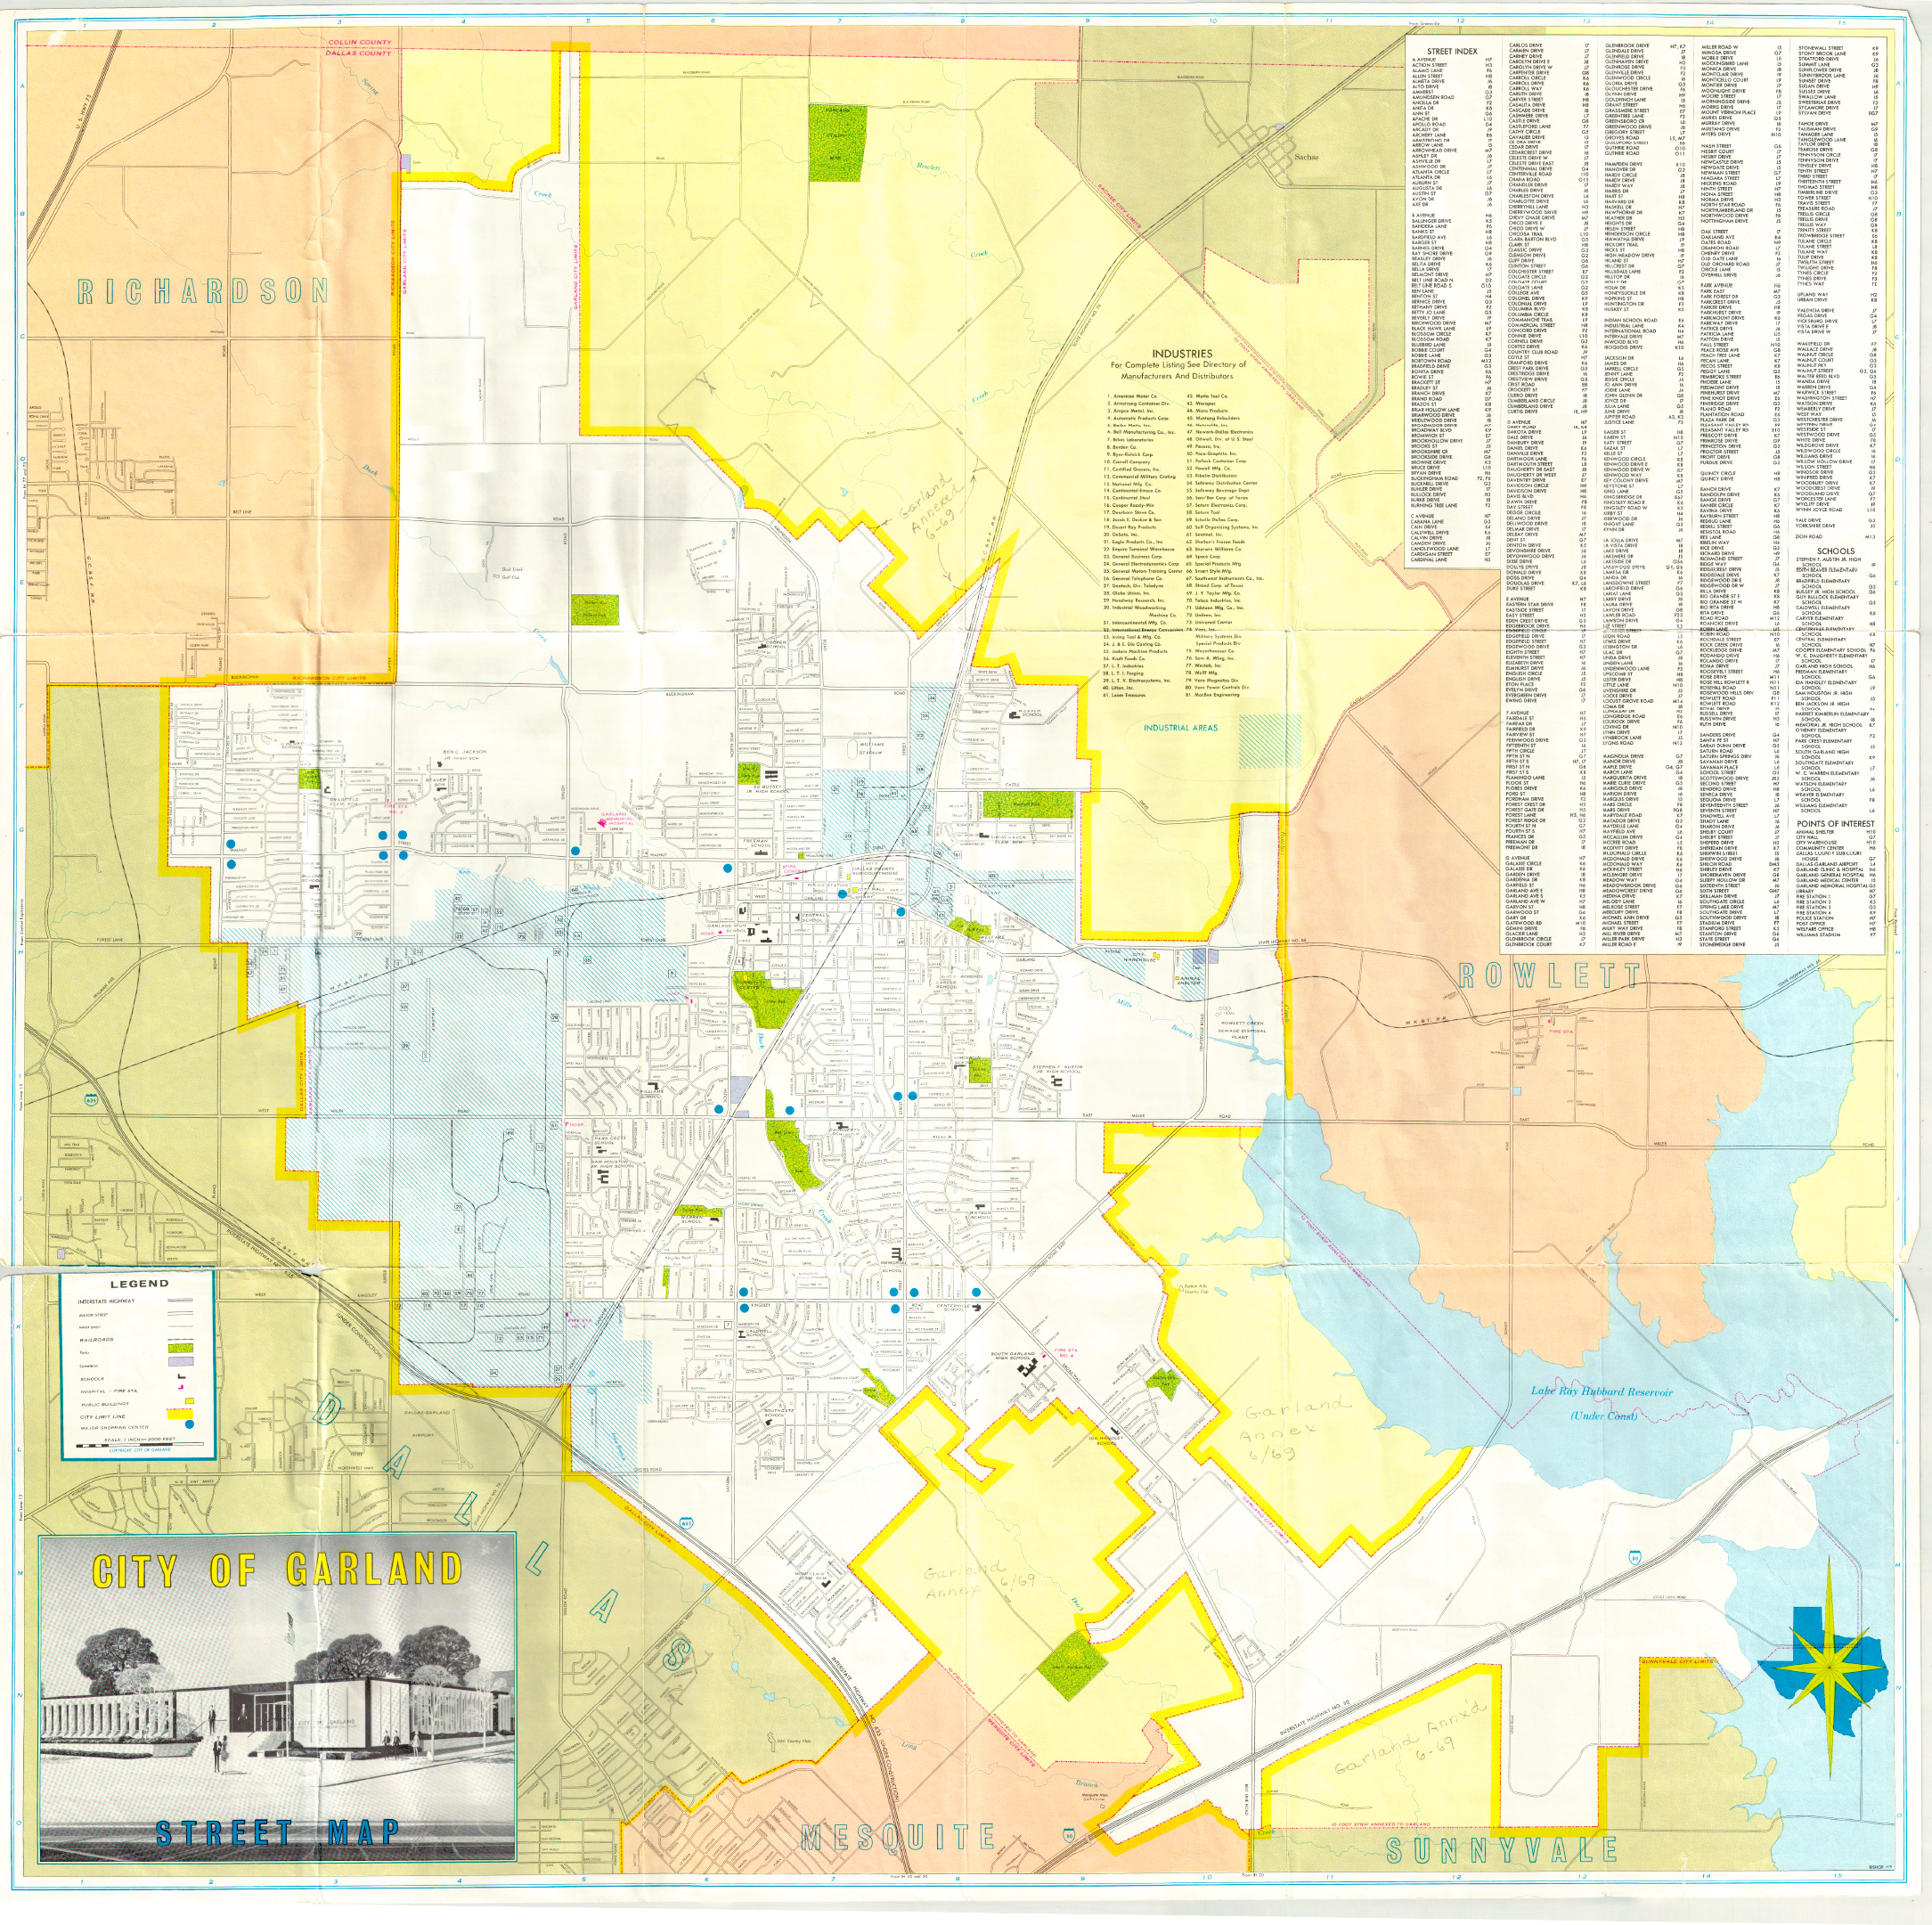 City Map, Garland Texas 1968